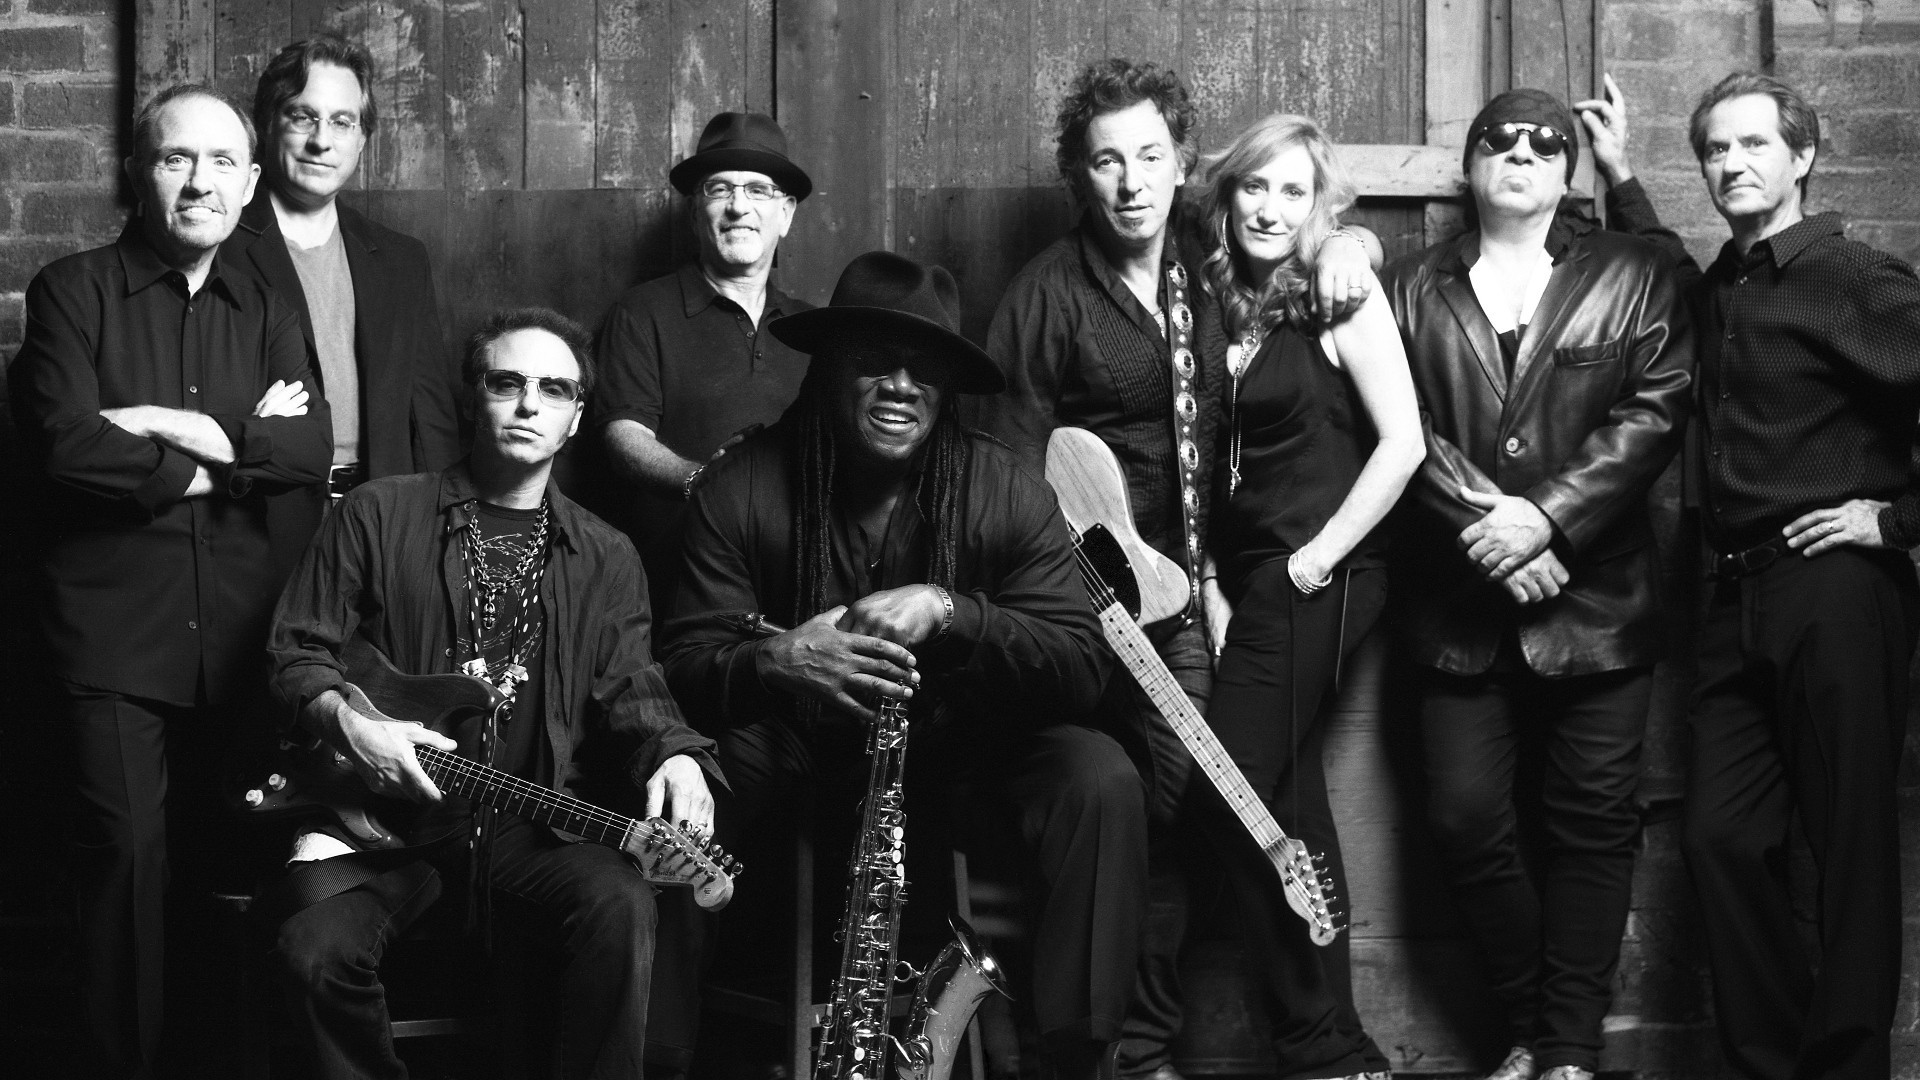 People 1920x1080 men musician singer group of people monochrome women guitar saxaphone rockstar Bruce Springsteen & The E Street Band music